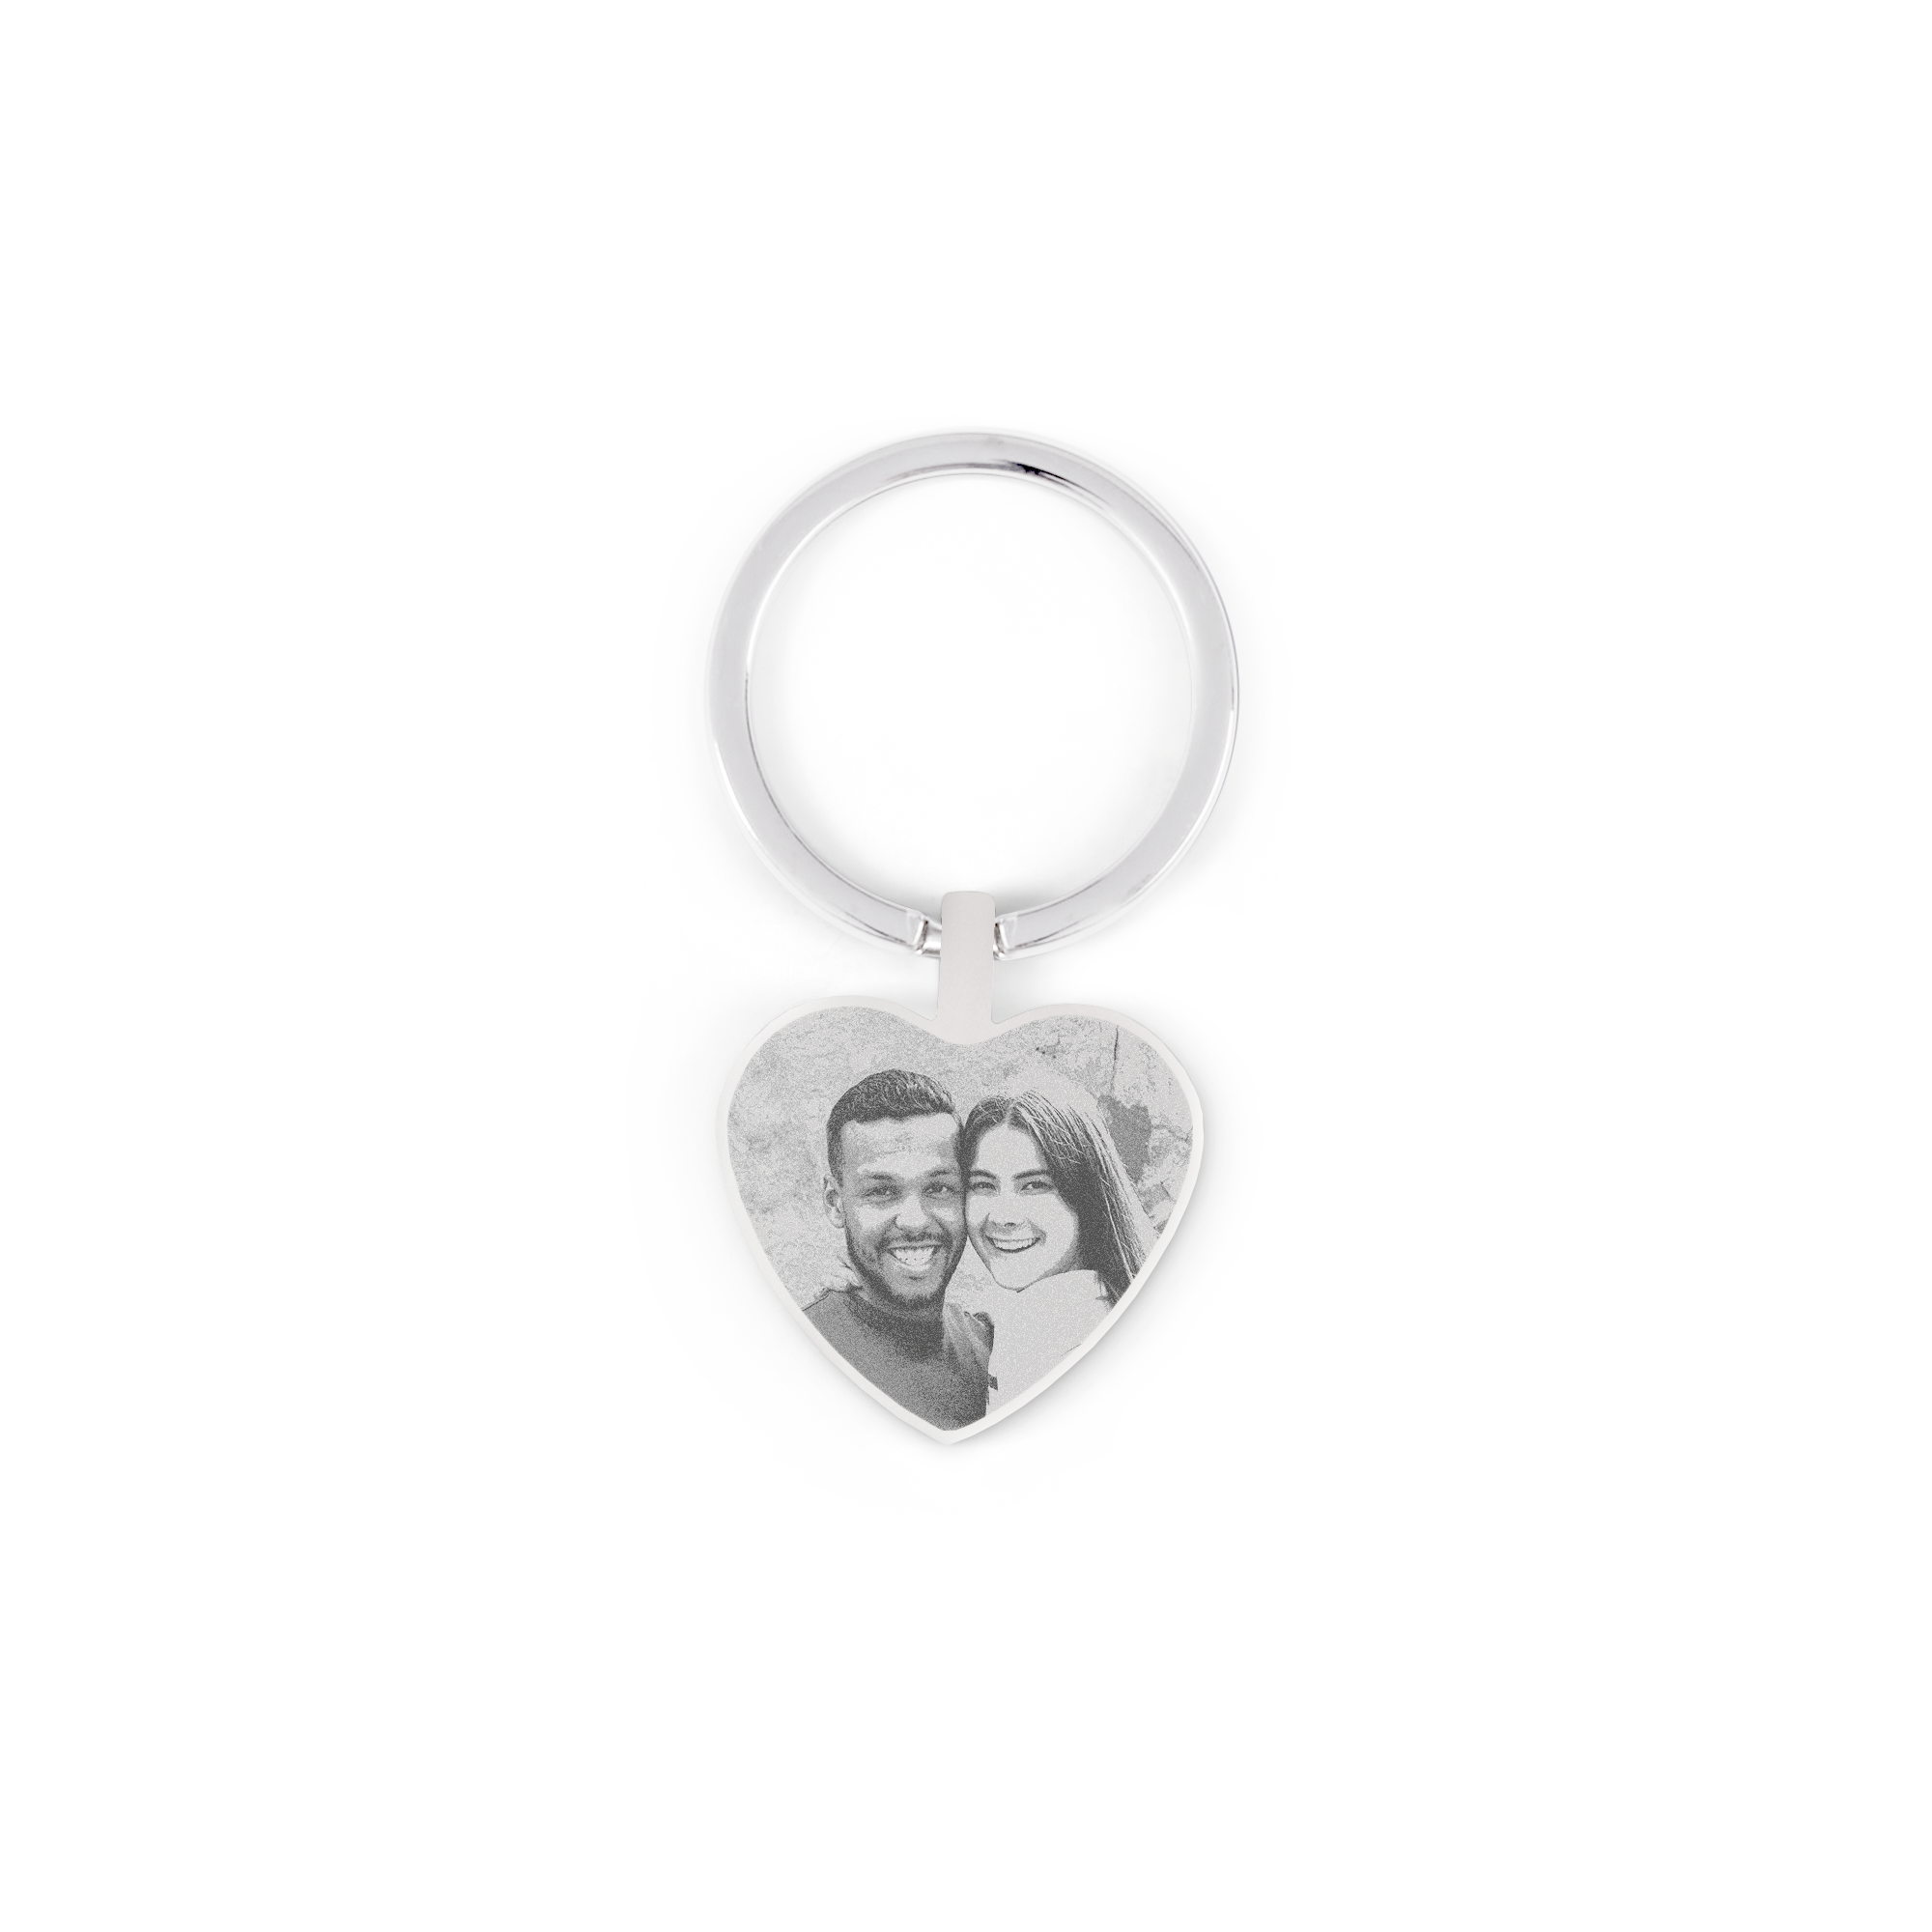 Personalised key ring - Heart - Stainless steel - Engraved